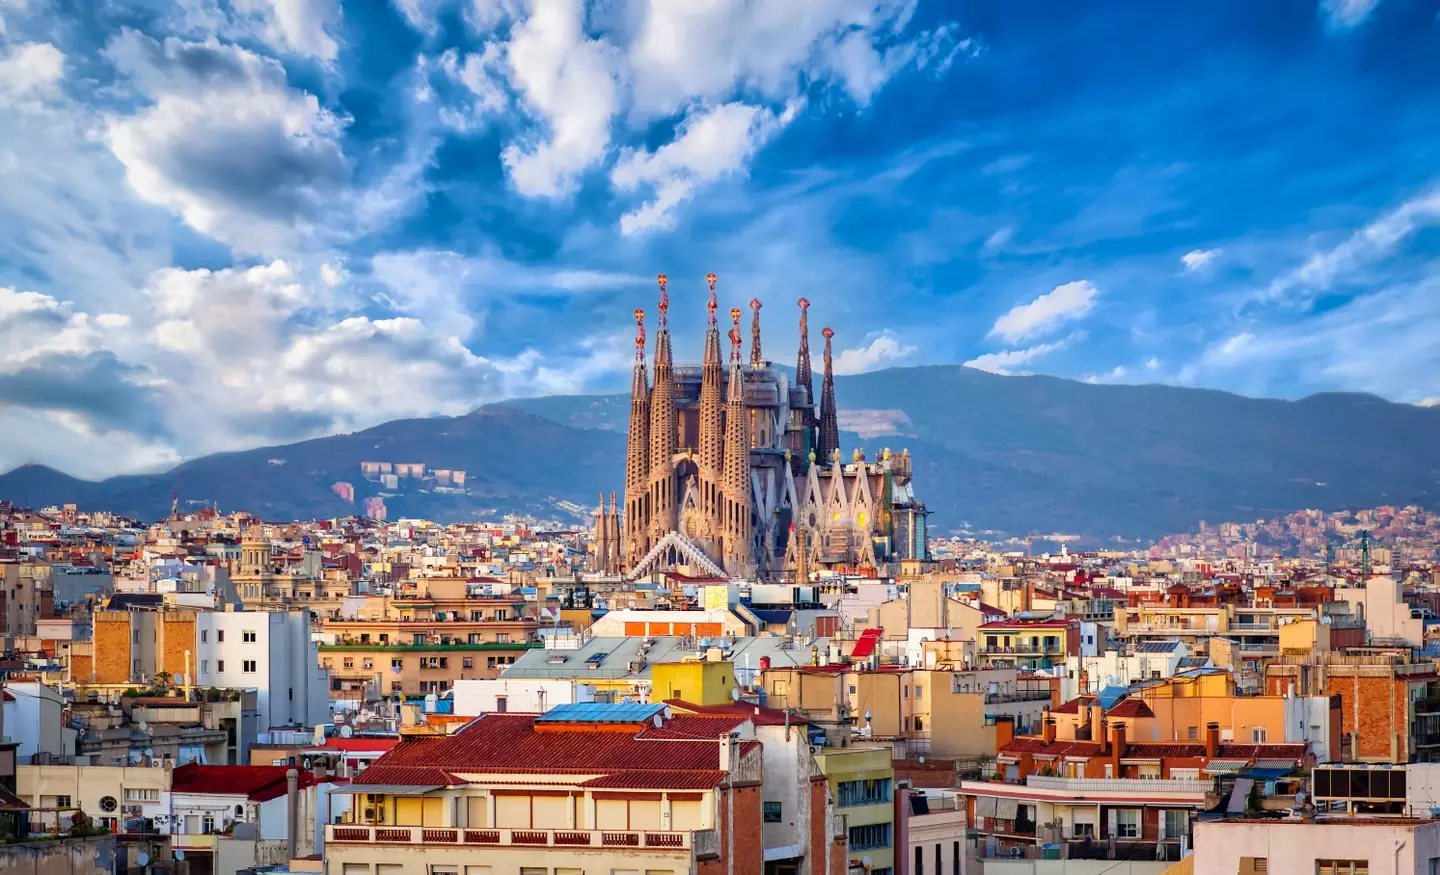 Iglesia de la Sagrada Familia de Antoni Gaudí, Barcelona.  (Imágenes de archivo falsas)